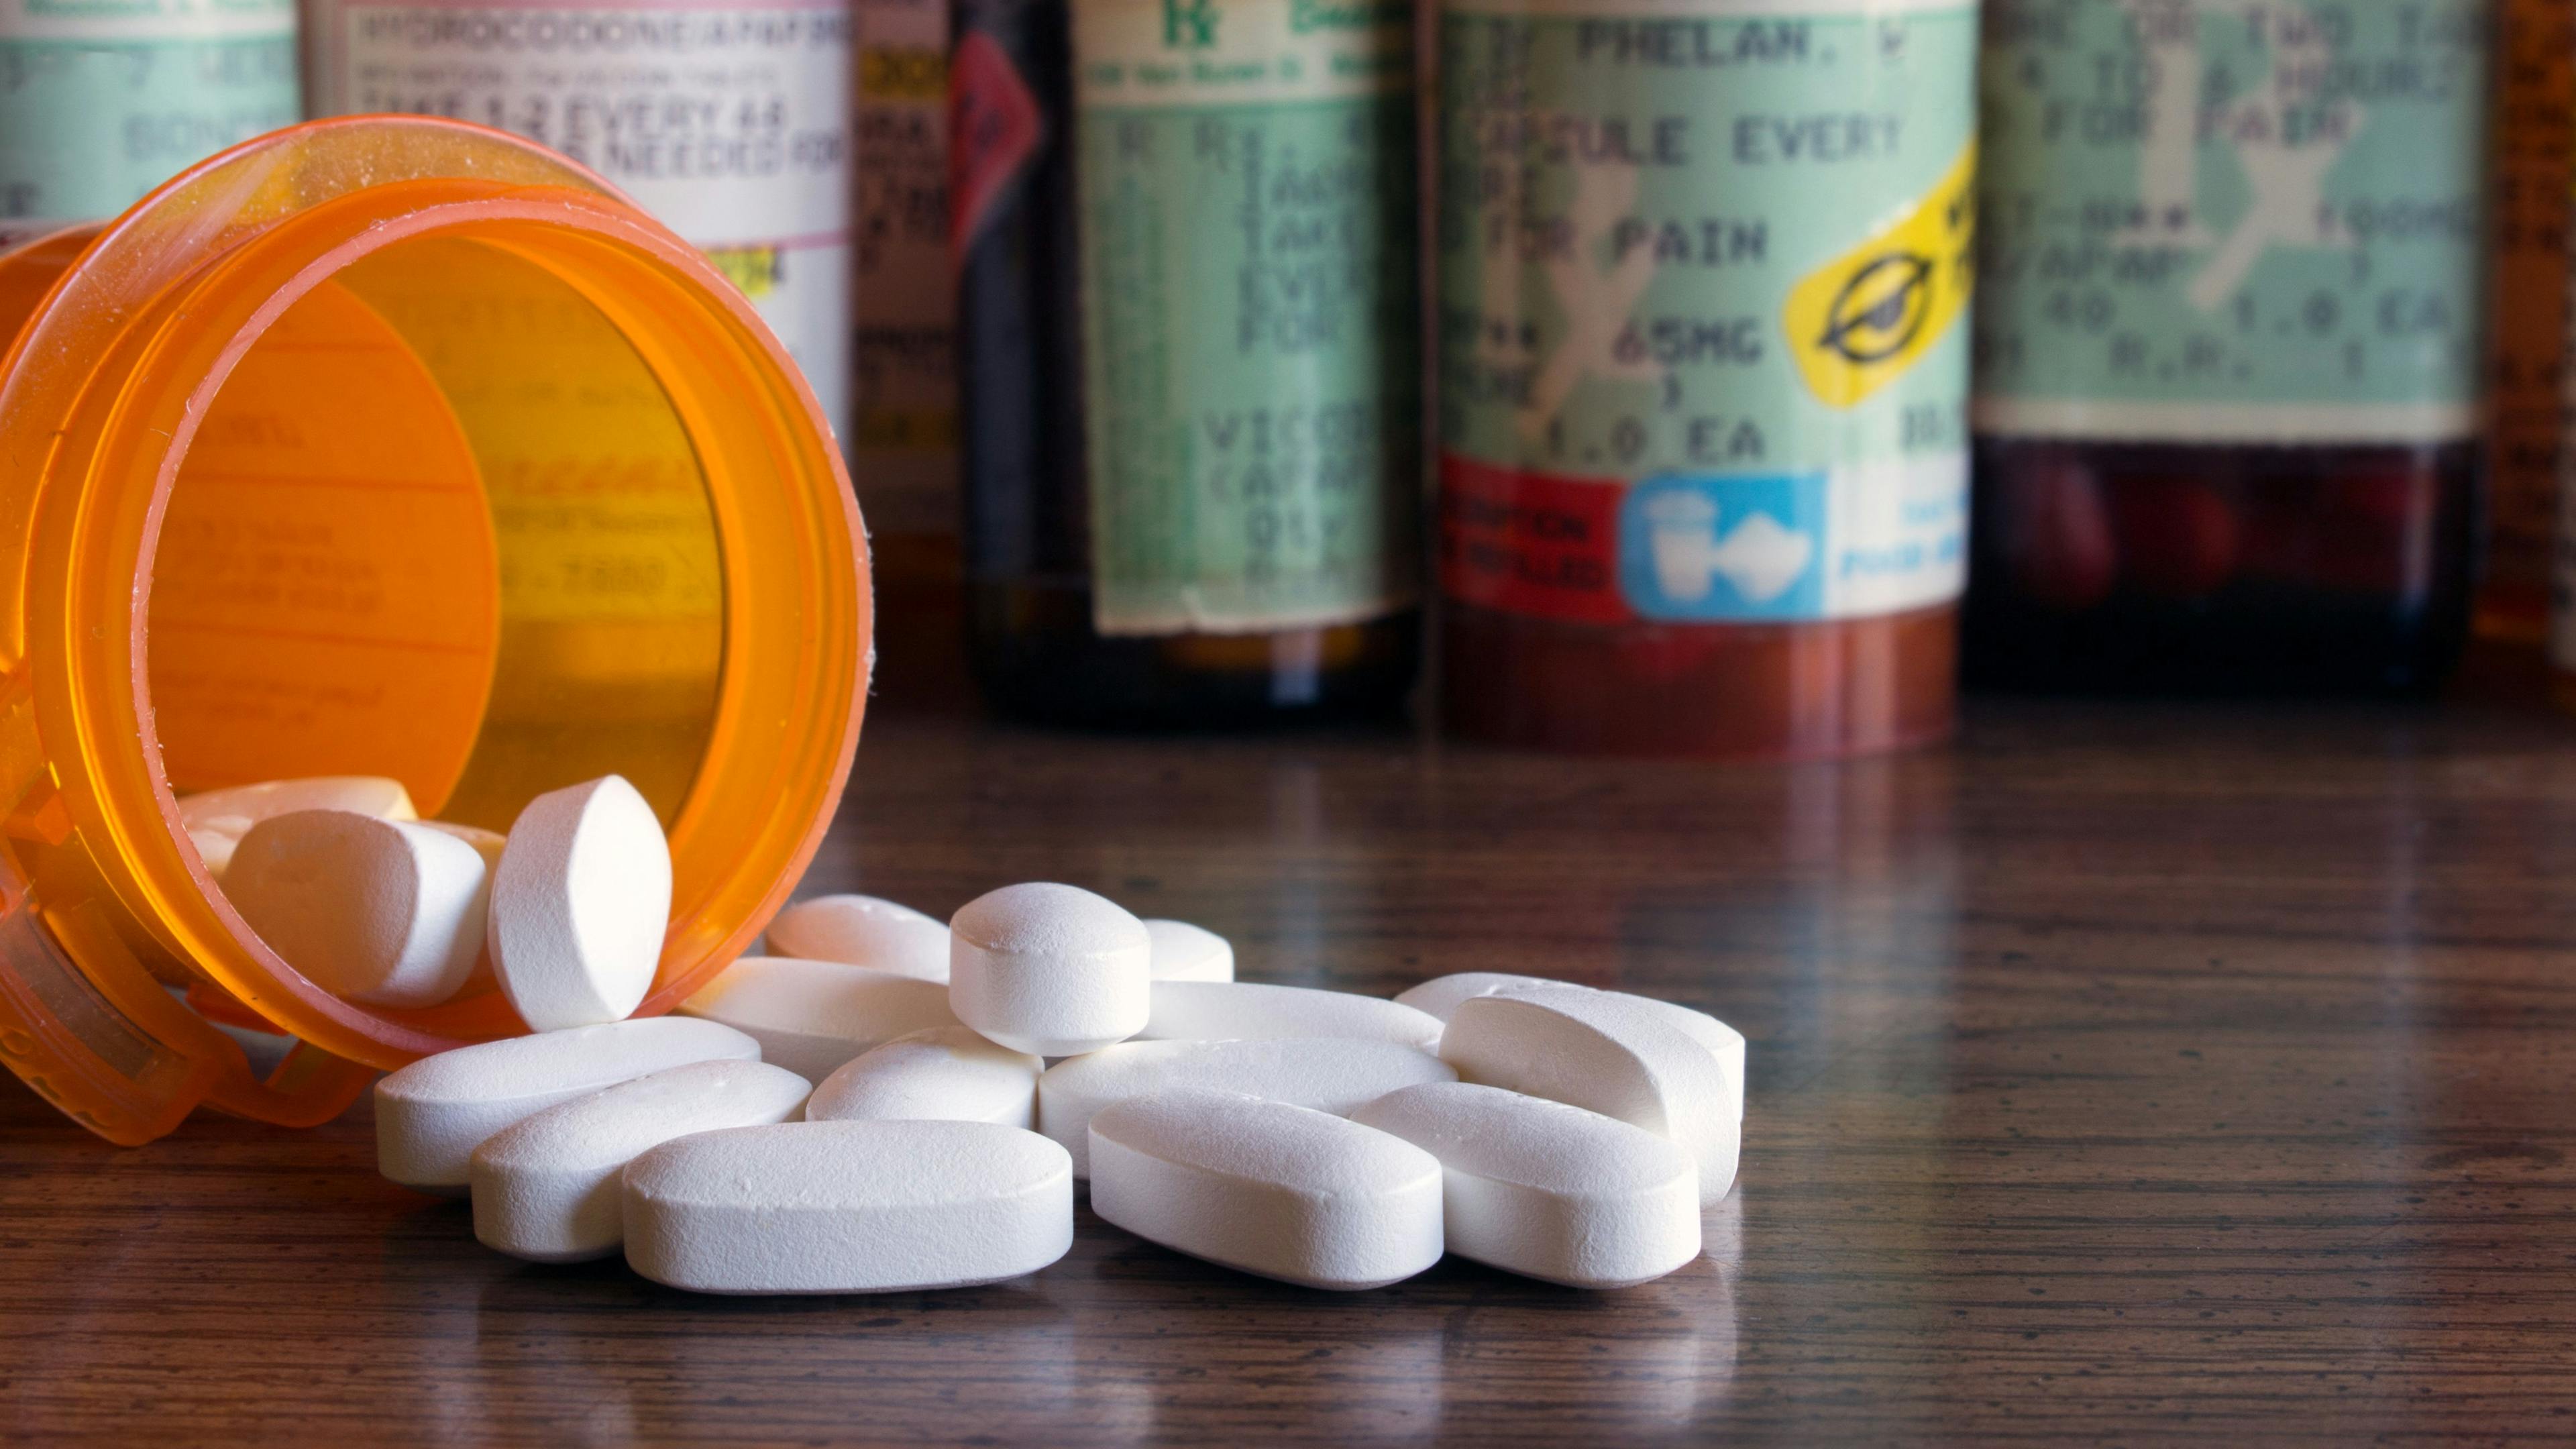 Study: 1 in 5 Pharmacies Blocks Access to Addiction Treatment Buprenorphine